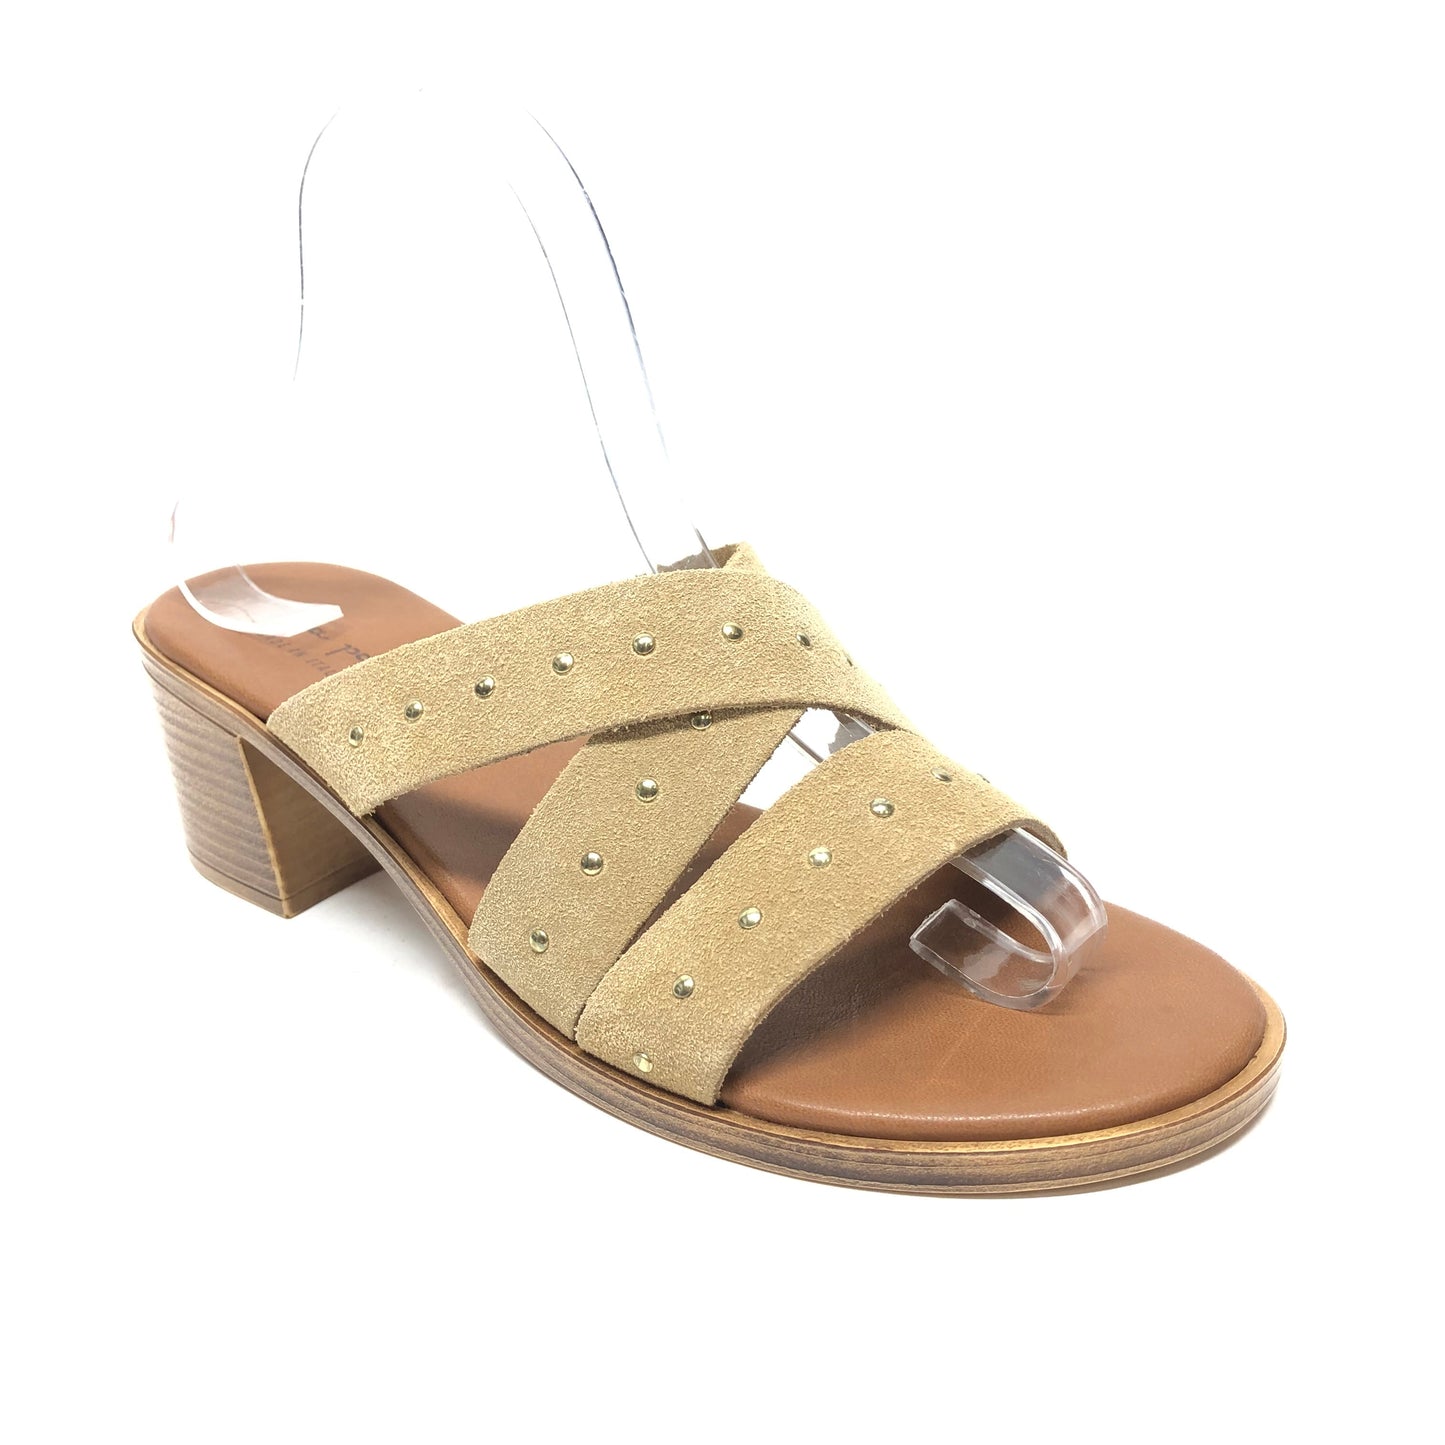 Sandals Heels Block By Cmc  Size: 8